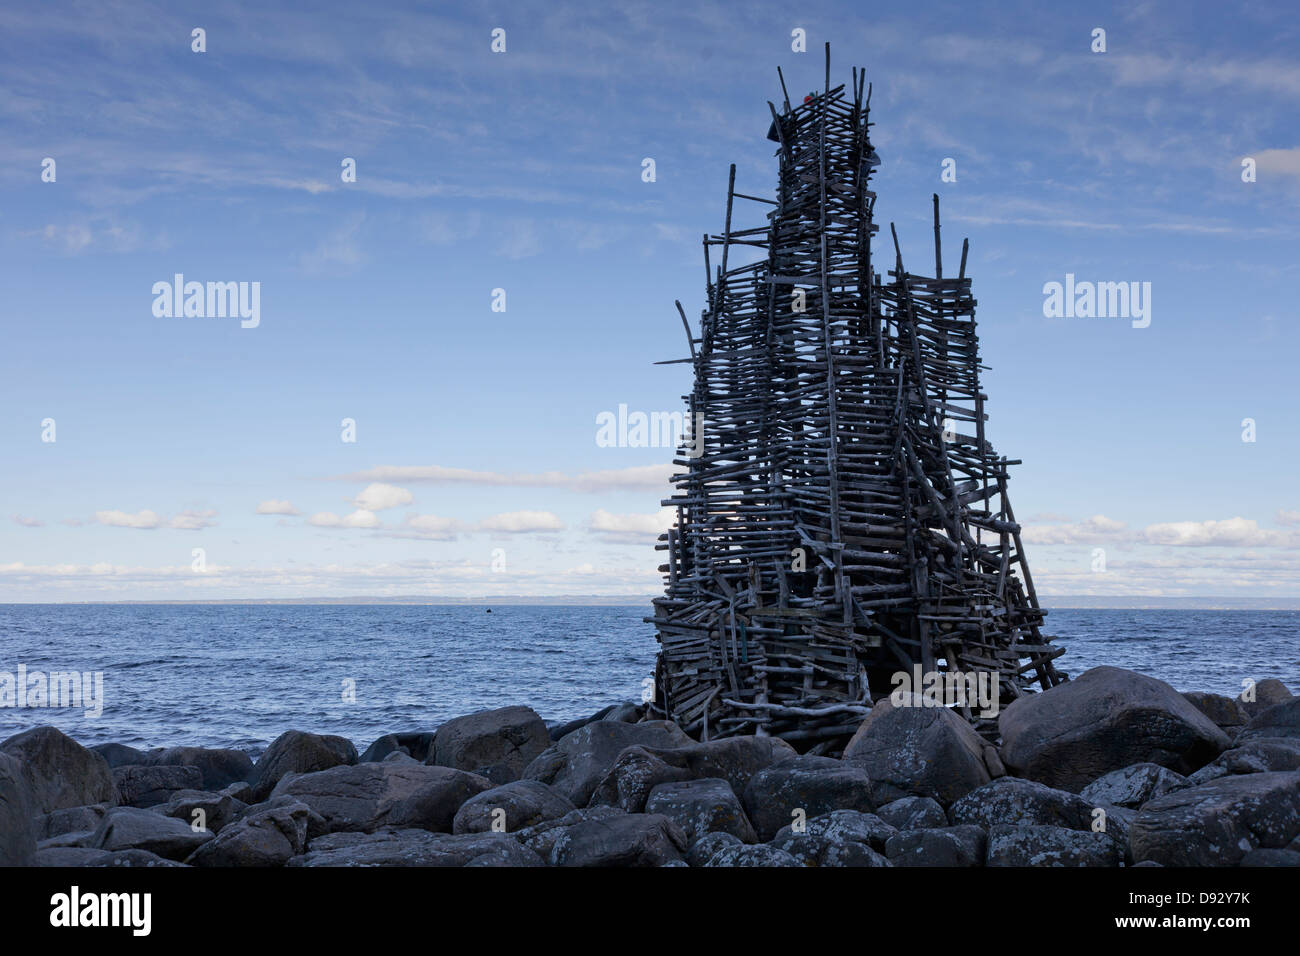 Wooden construction 'Nimis' on rocky beach Stock Photo